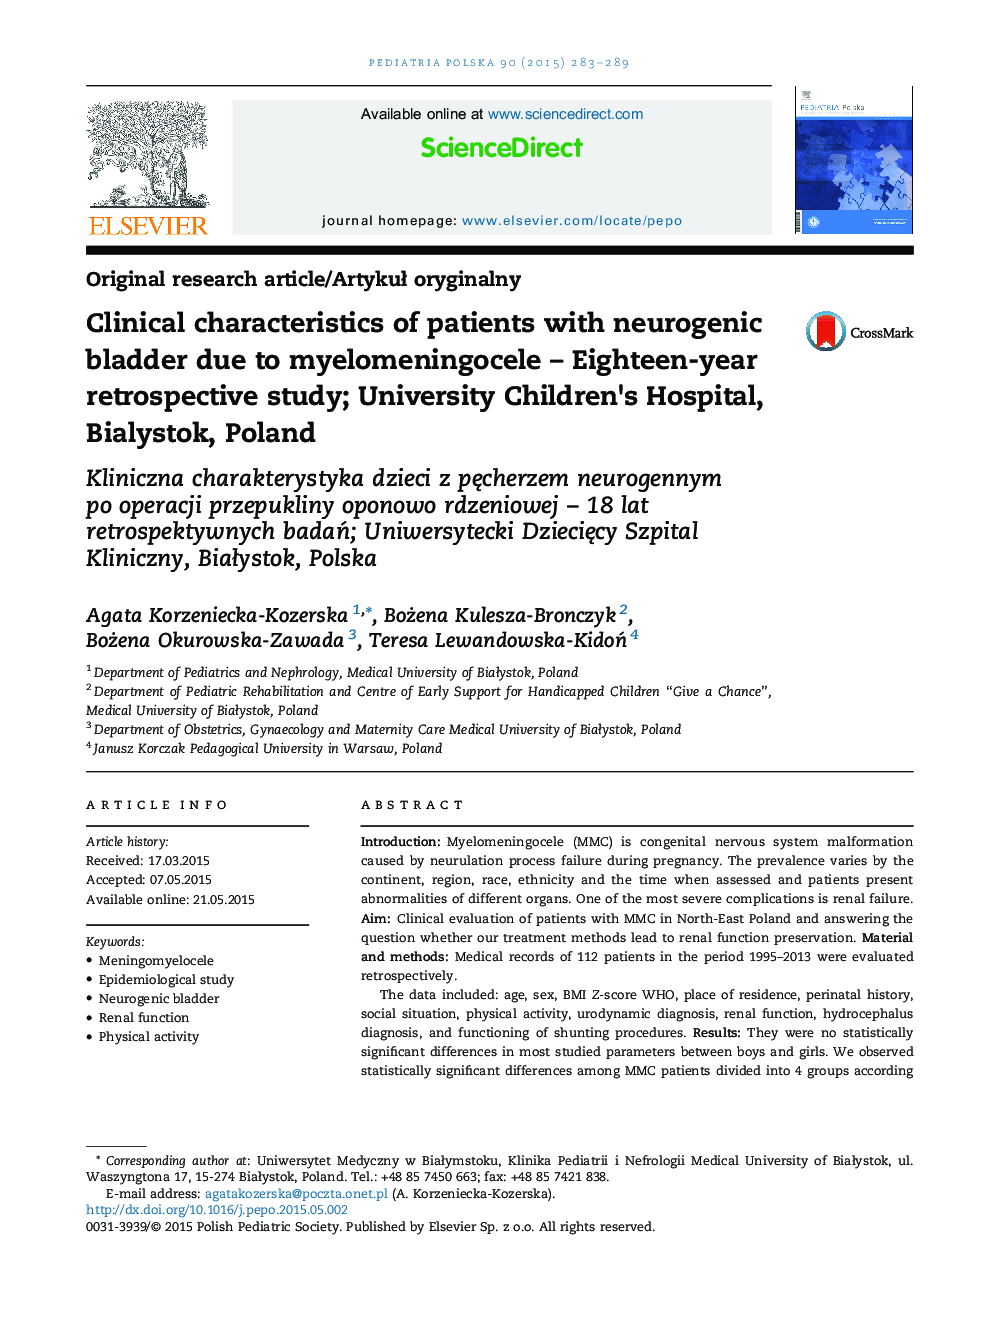 Clinical characteristics of patients with neurogenic bladder due to myelomeningocele - Eighteen-year retrospective study; University Children's Hospital, Bialystok, Poland